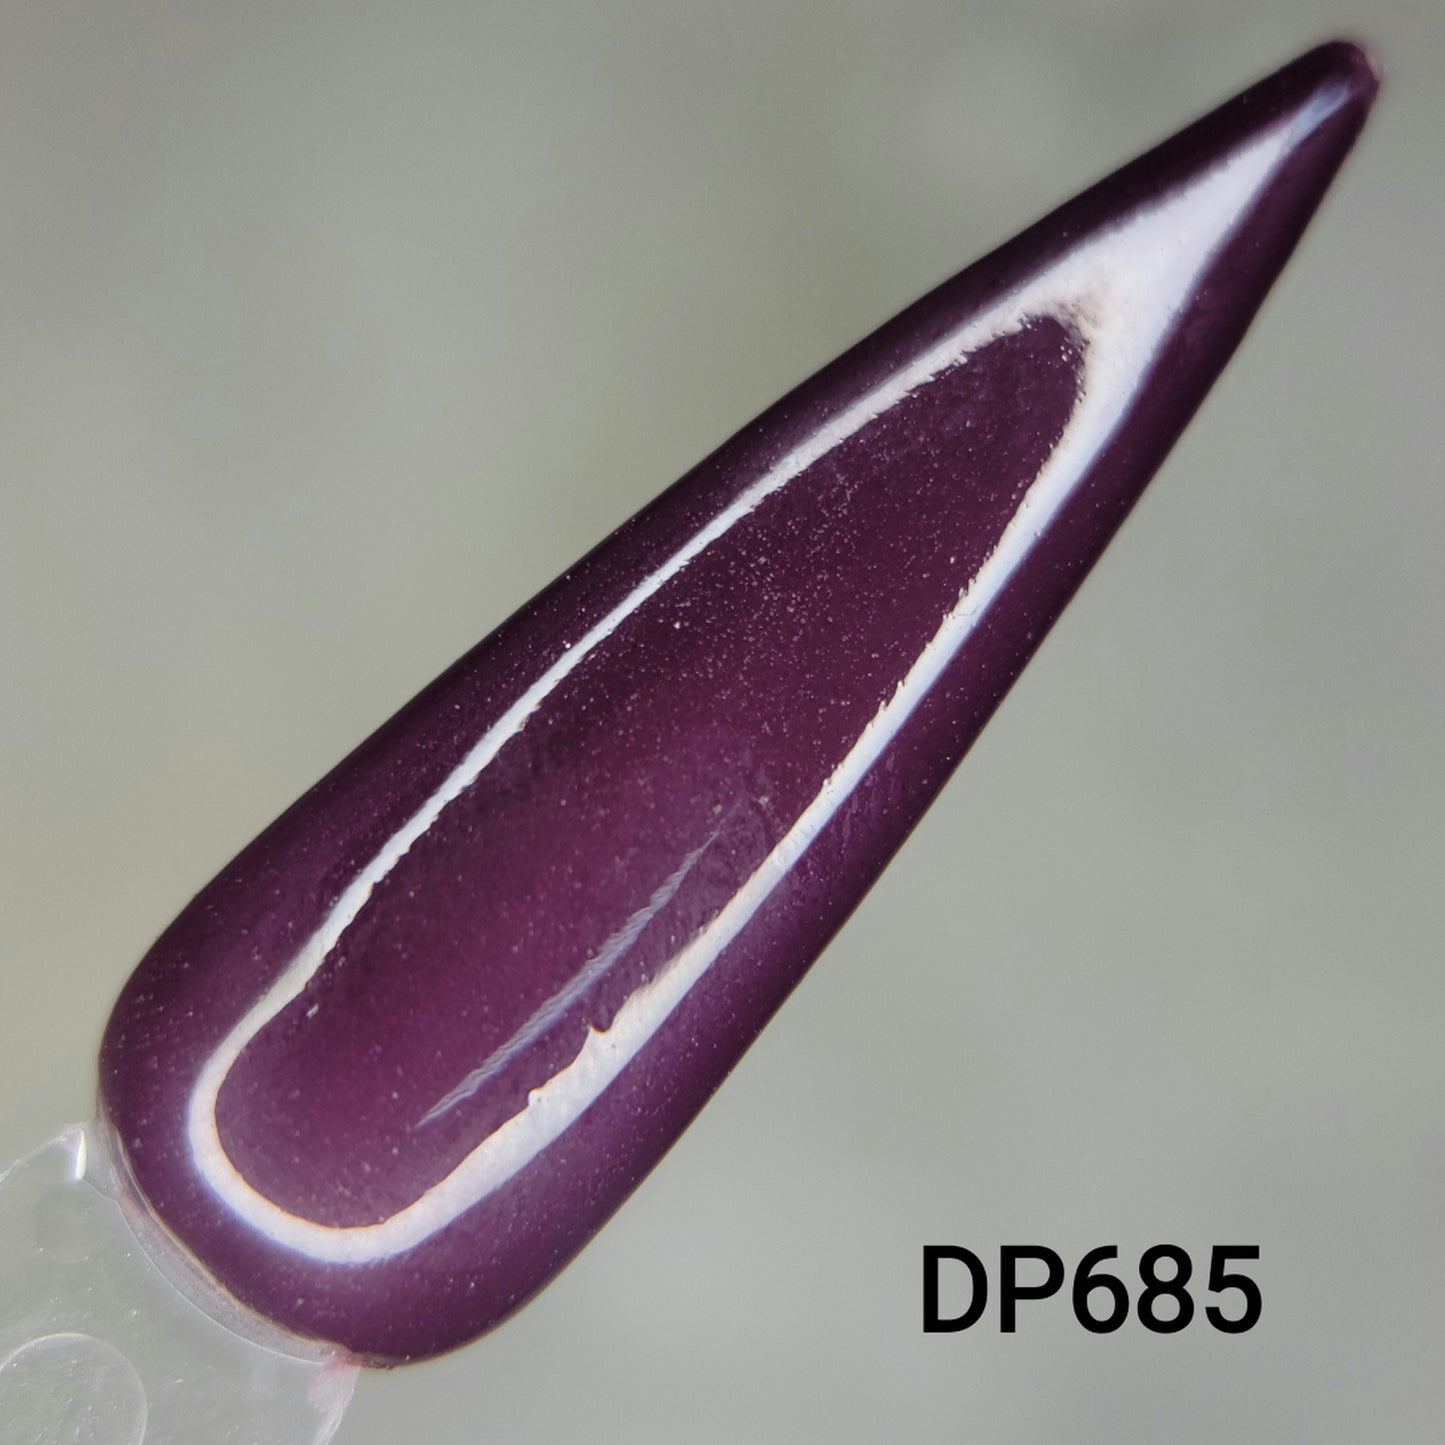 Sinister DP685